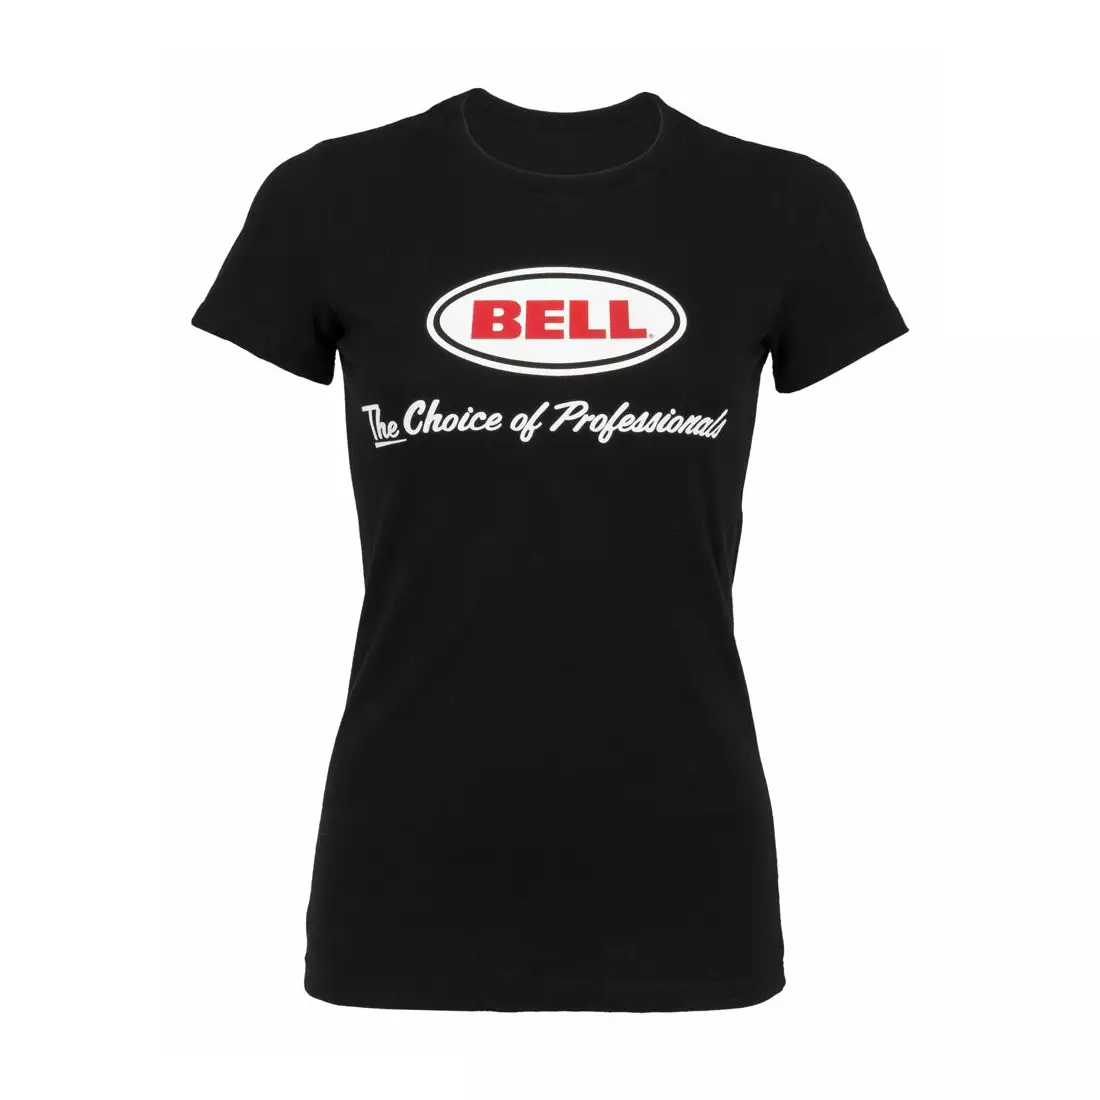 BELL ladies' short-sleeved T-shirt BASIC CHOICE OF PROS black BEL-7070720